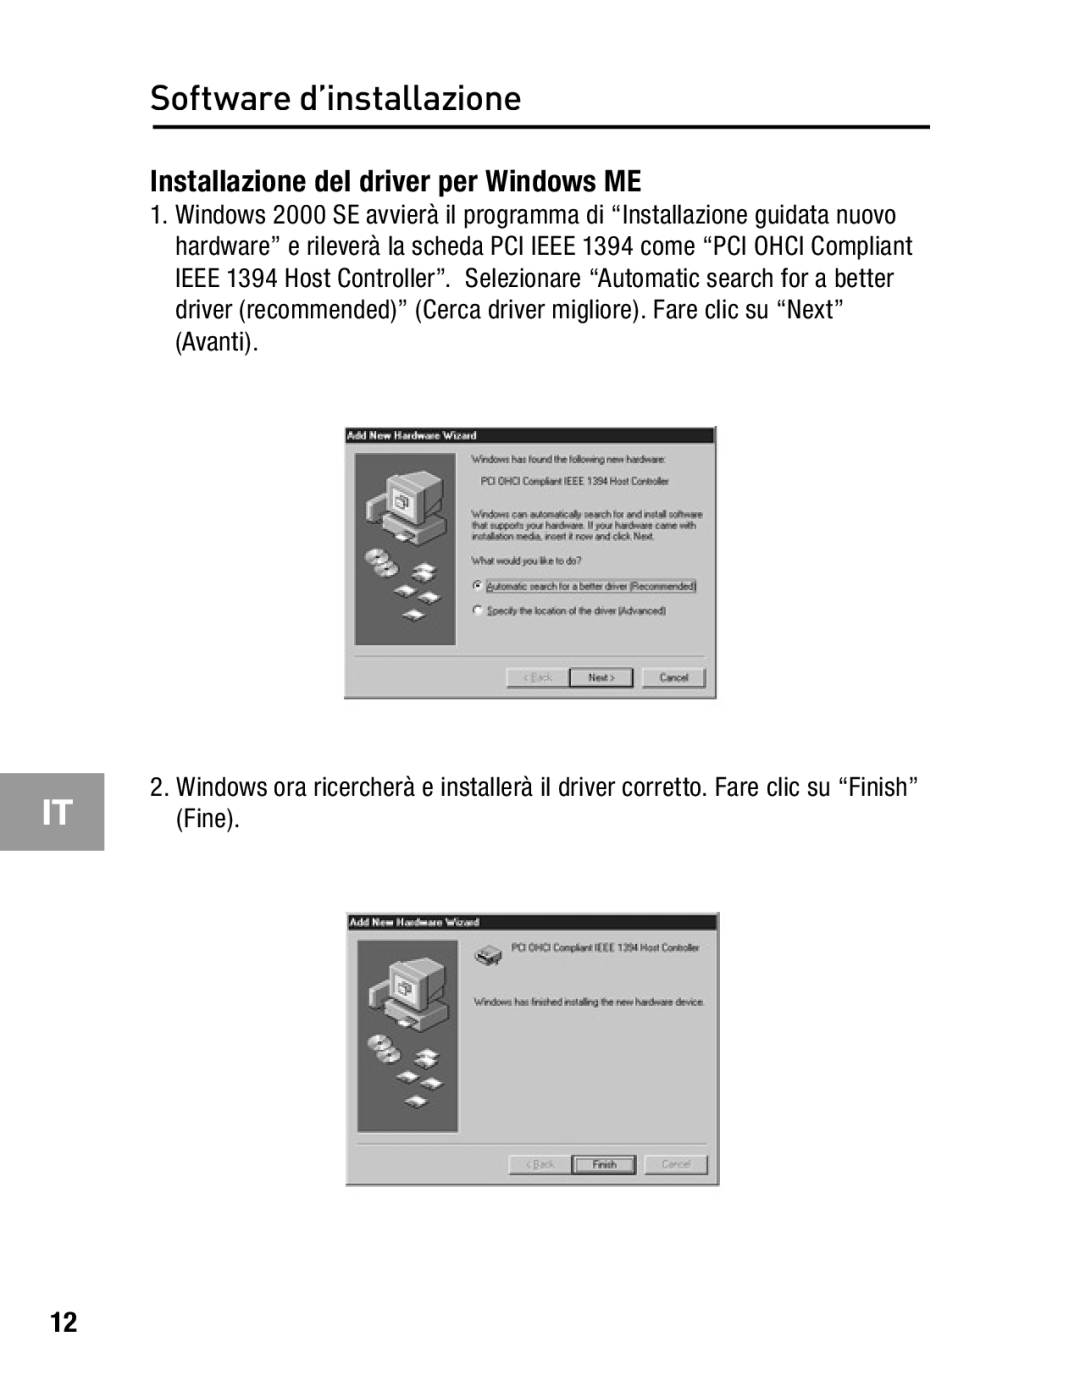 Belkin F5U503, F5U502 user manual Installazione del driver per Windows ME, Software d’installazione 